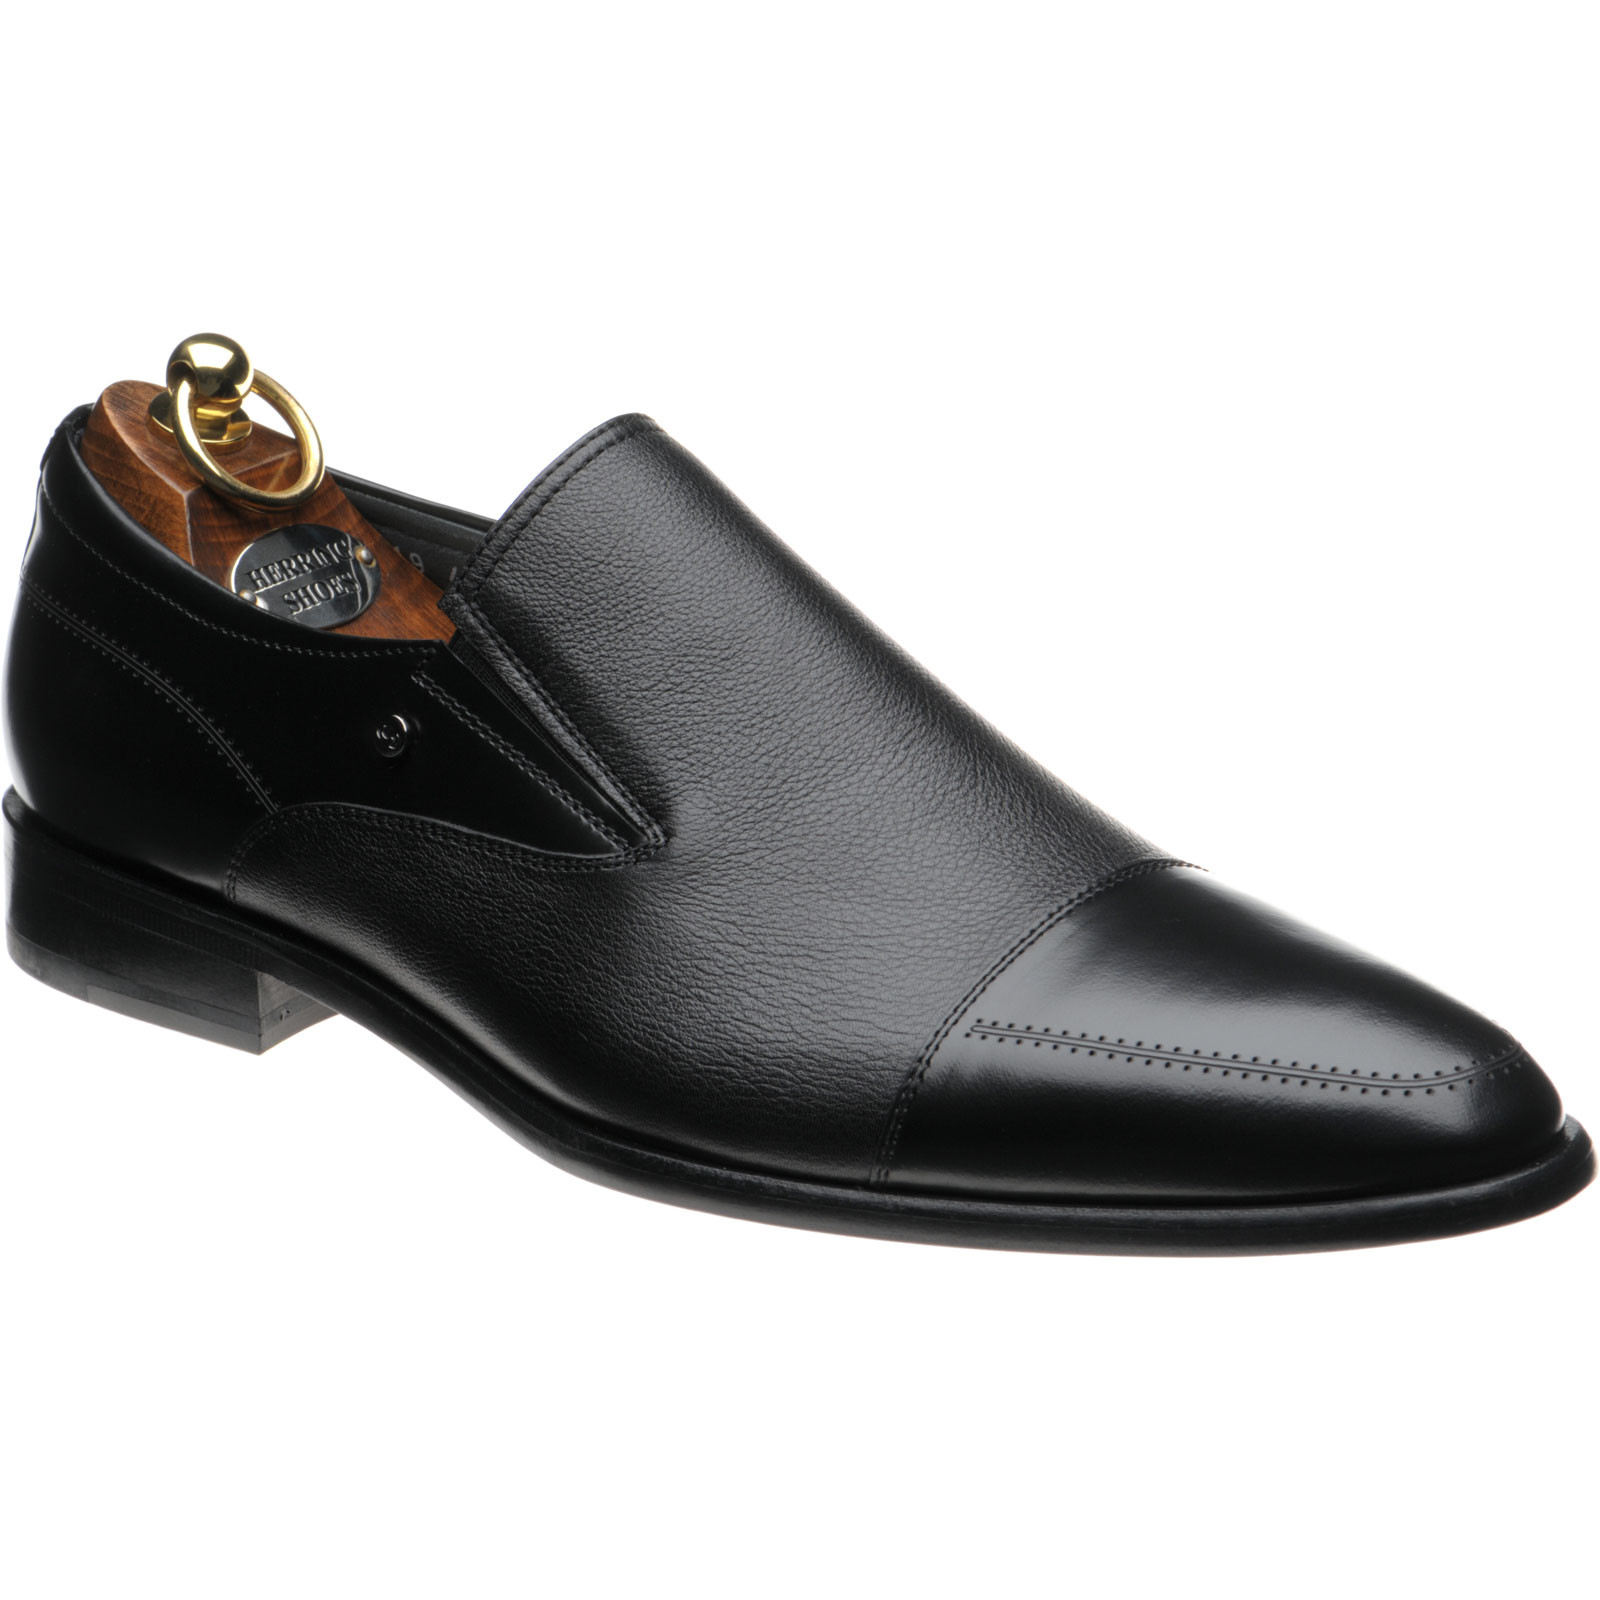 Herring shoes | Herring Executive | Frederick in Black Calf and ...